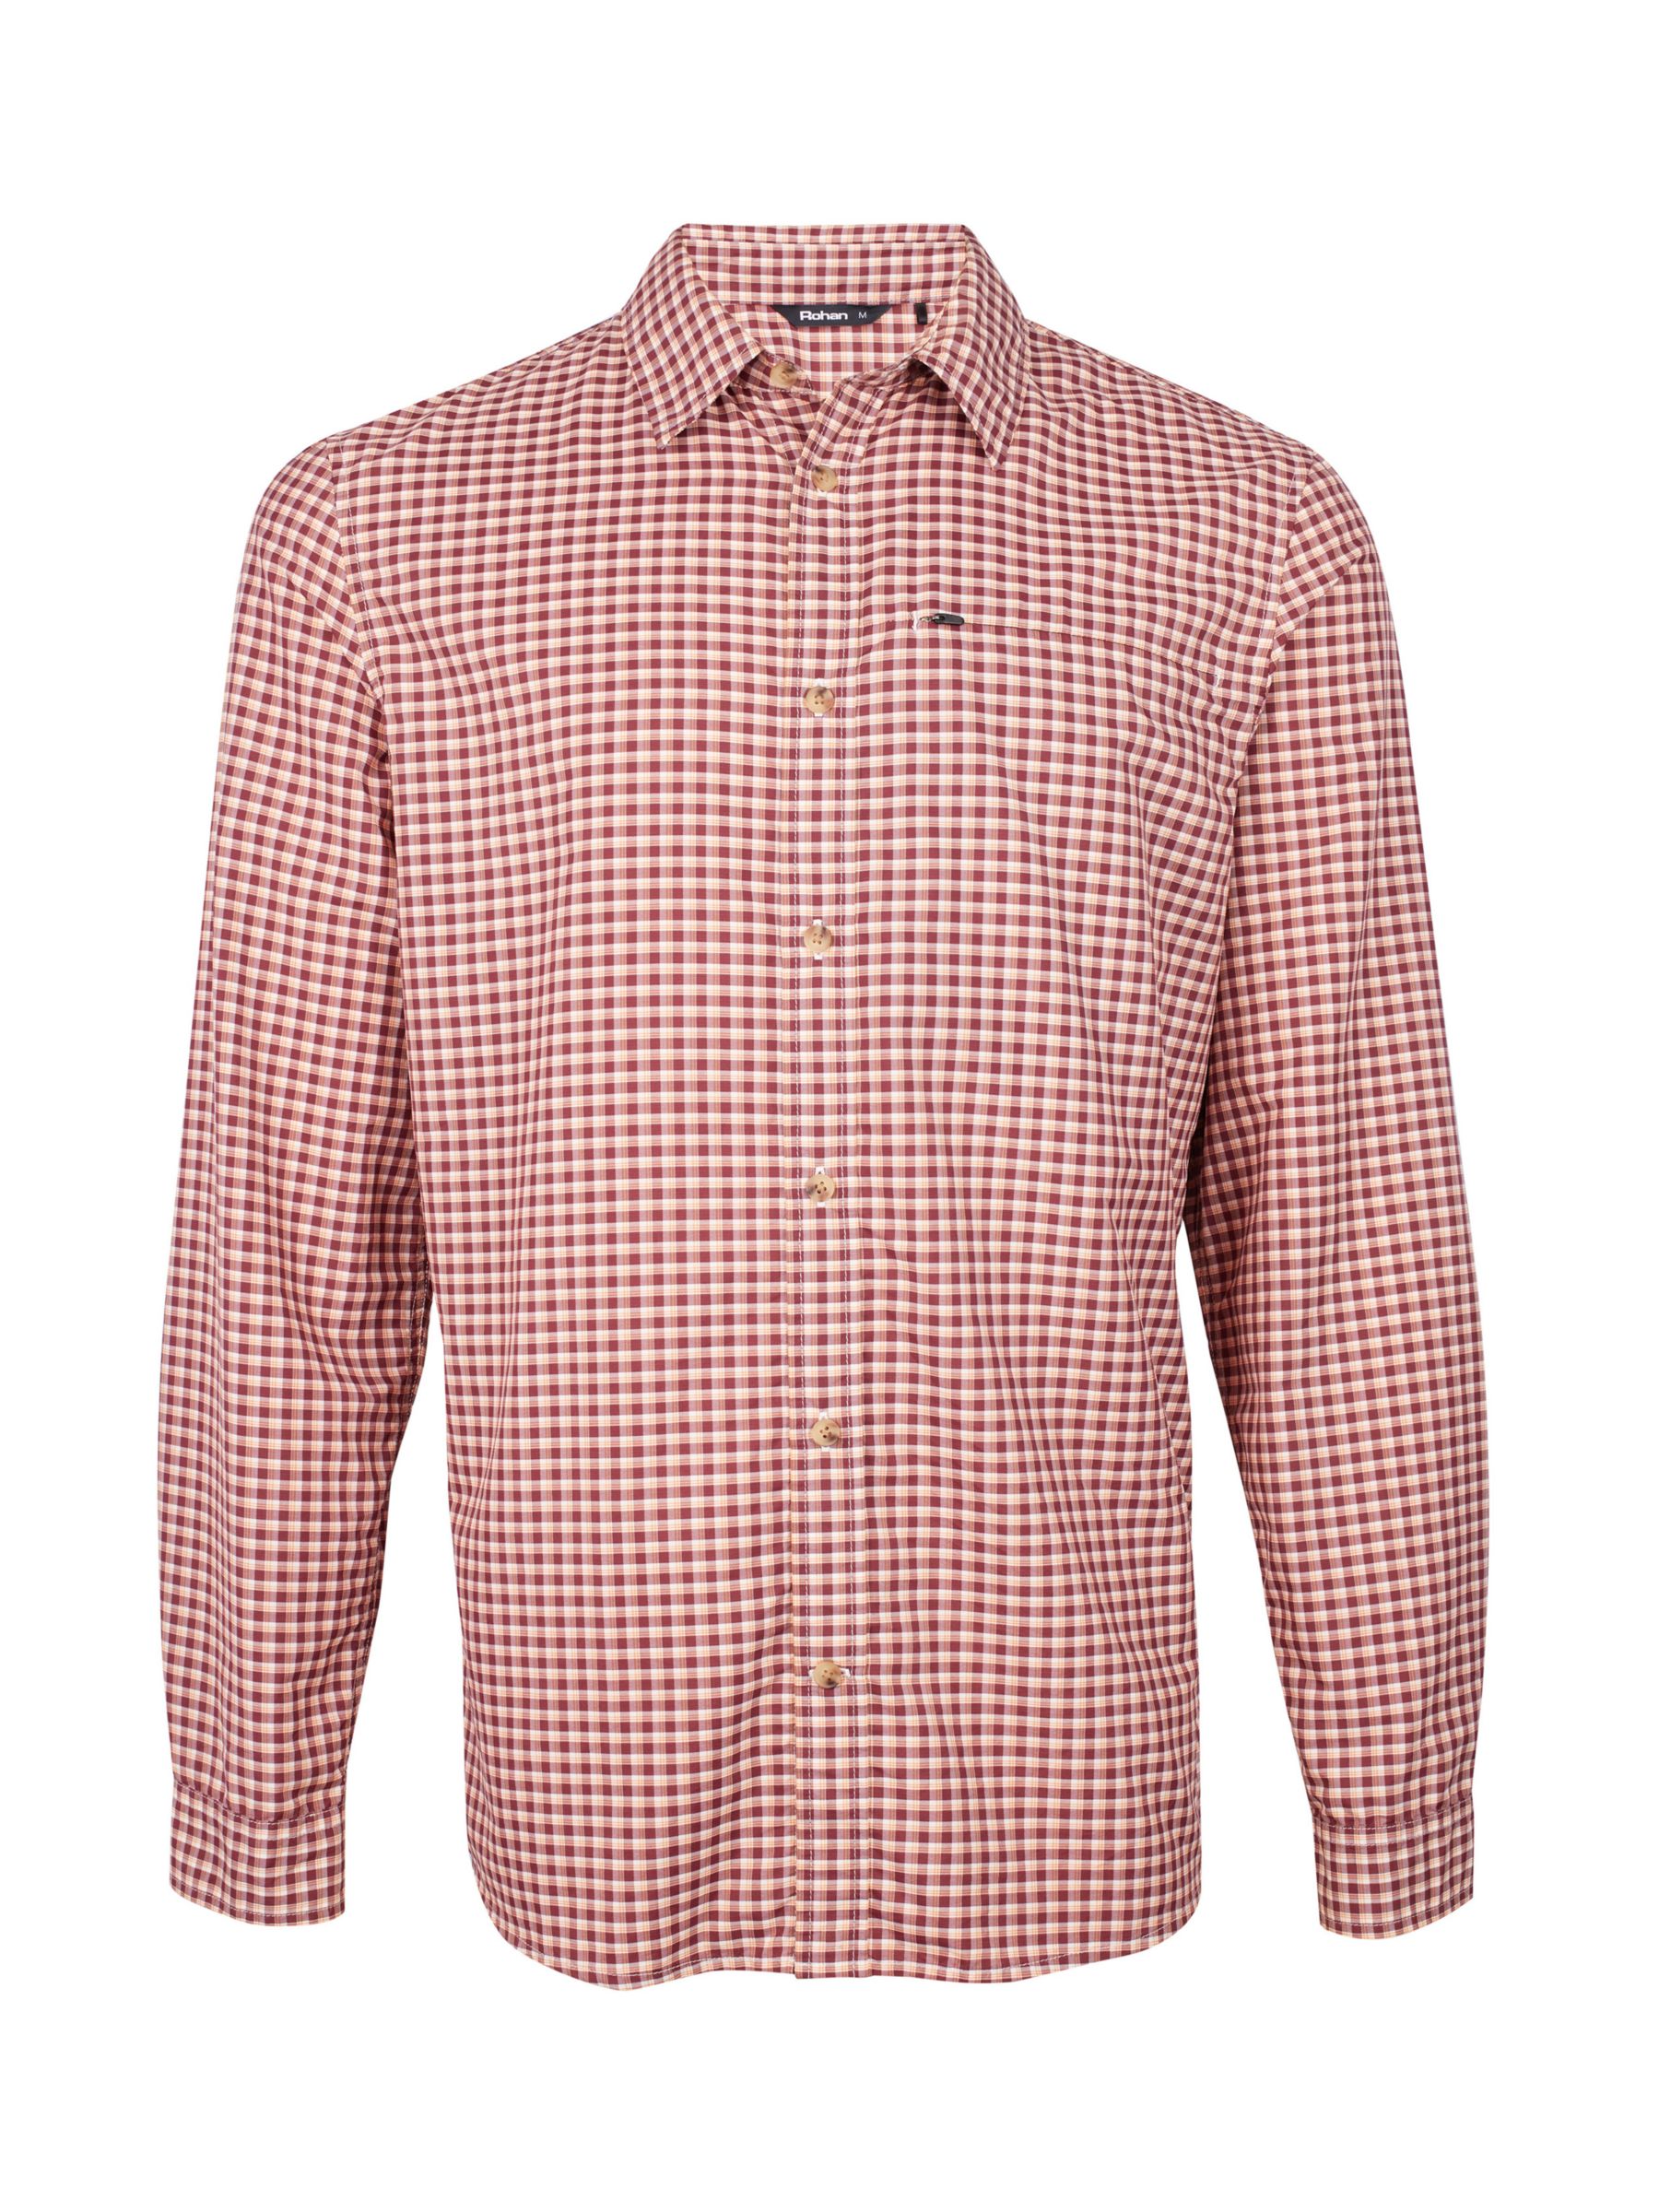 Buy Rohan Firth Long Sleeve Gingham Shirt Online at johnlewis.com